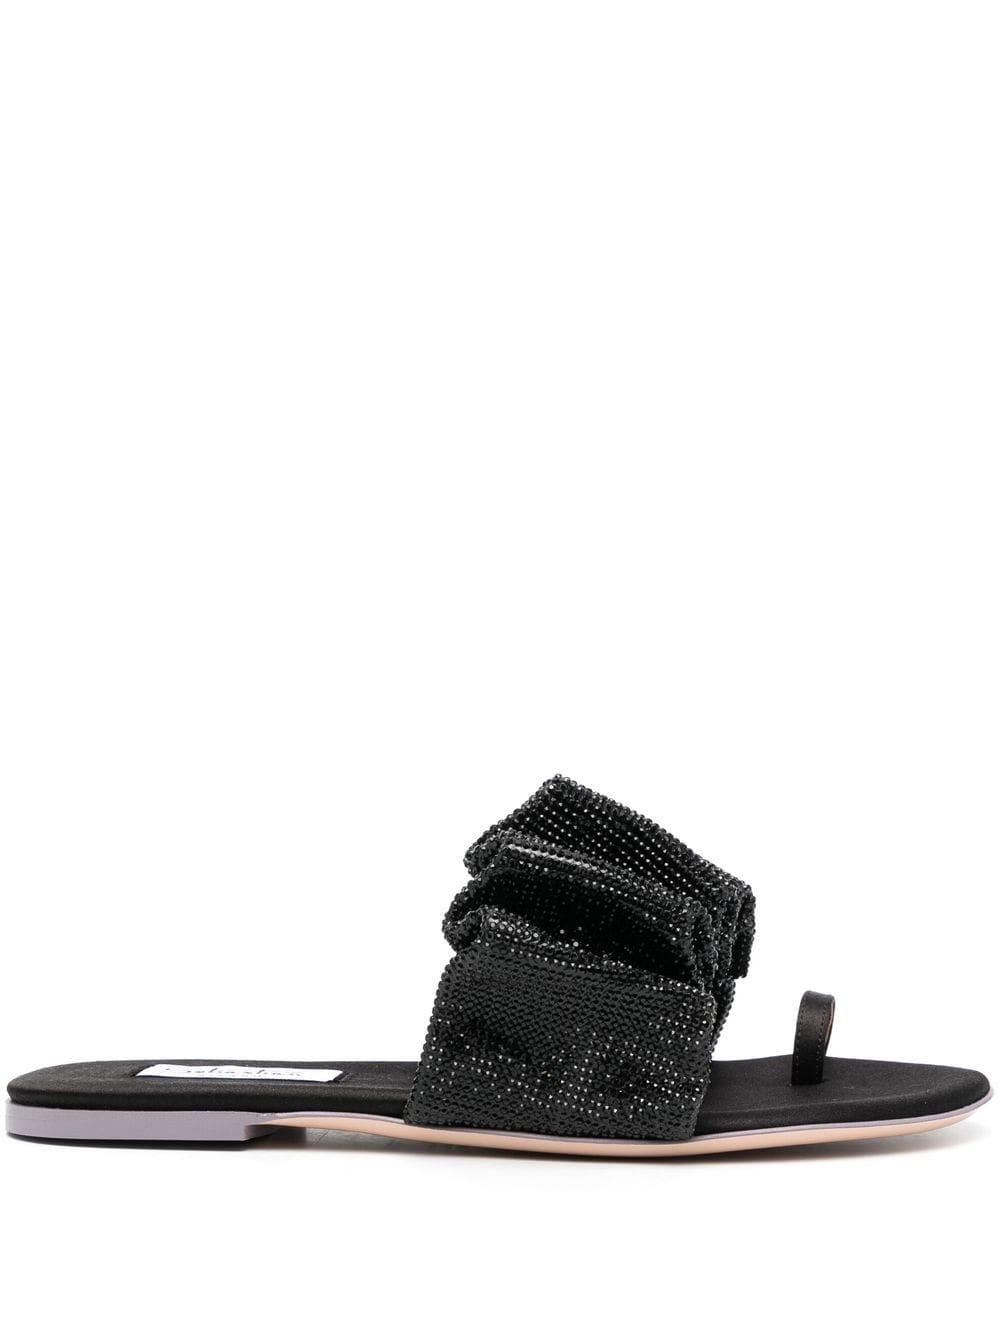 Sebastian Milano Flat Leather Sandals in Black | Lyst